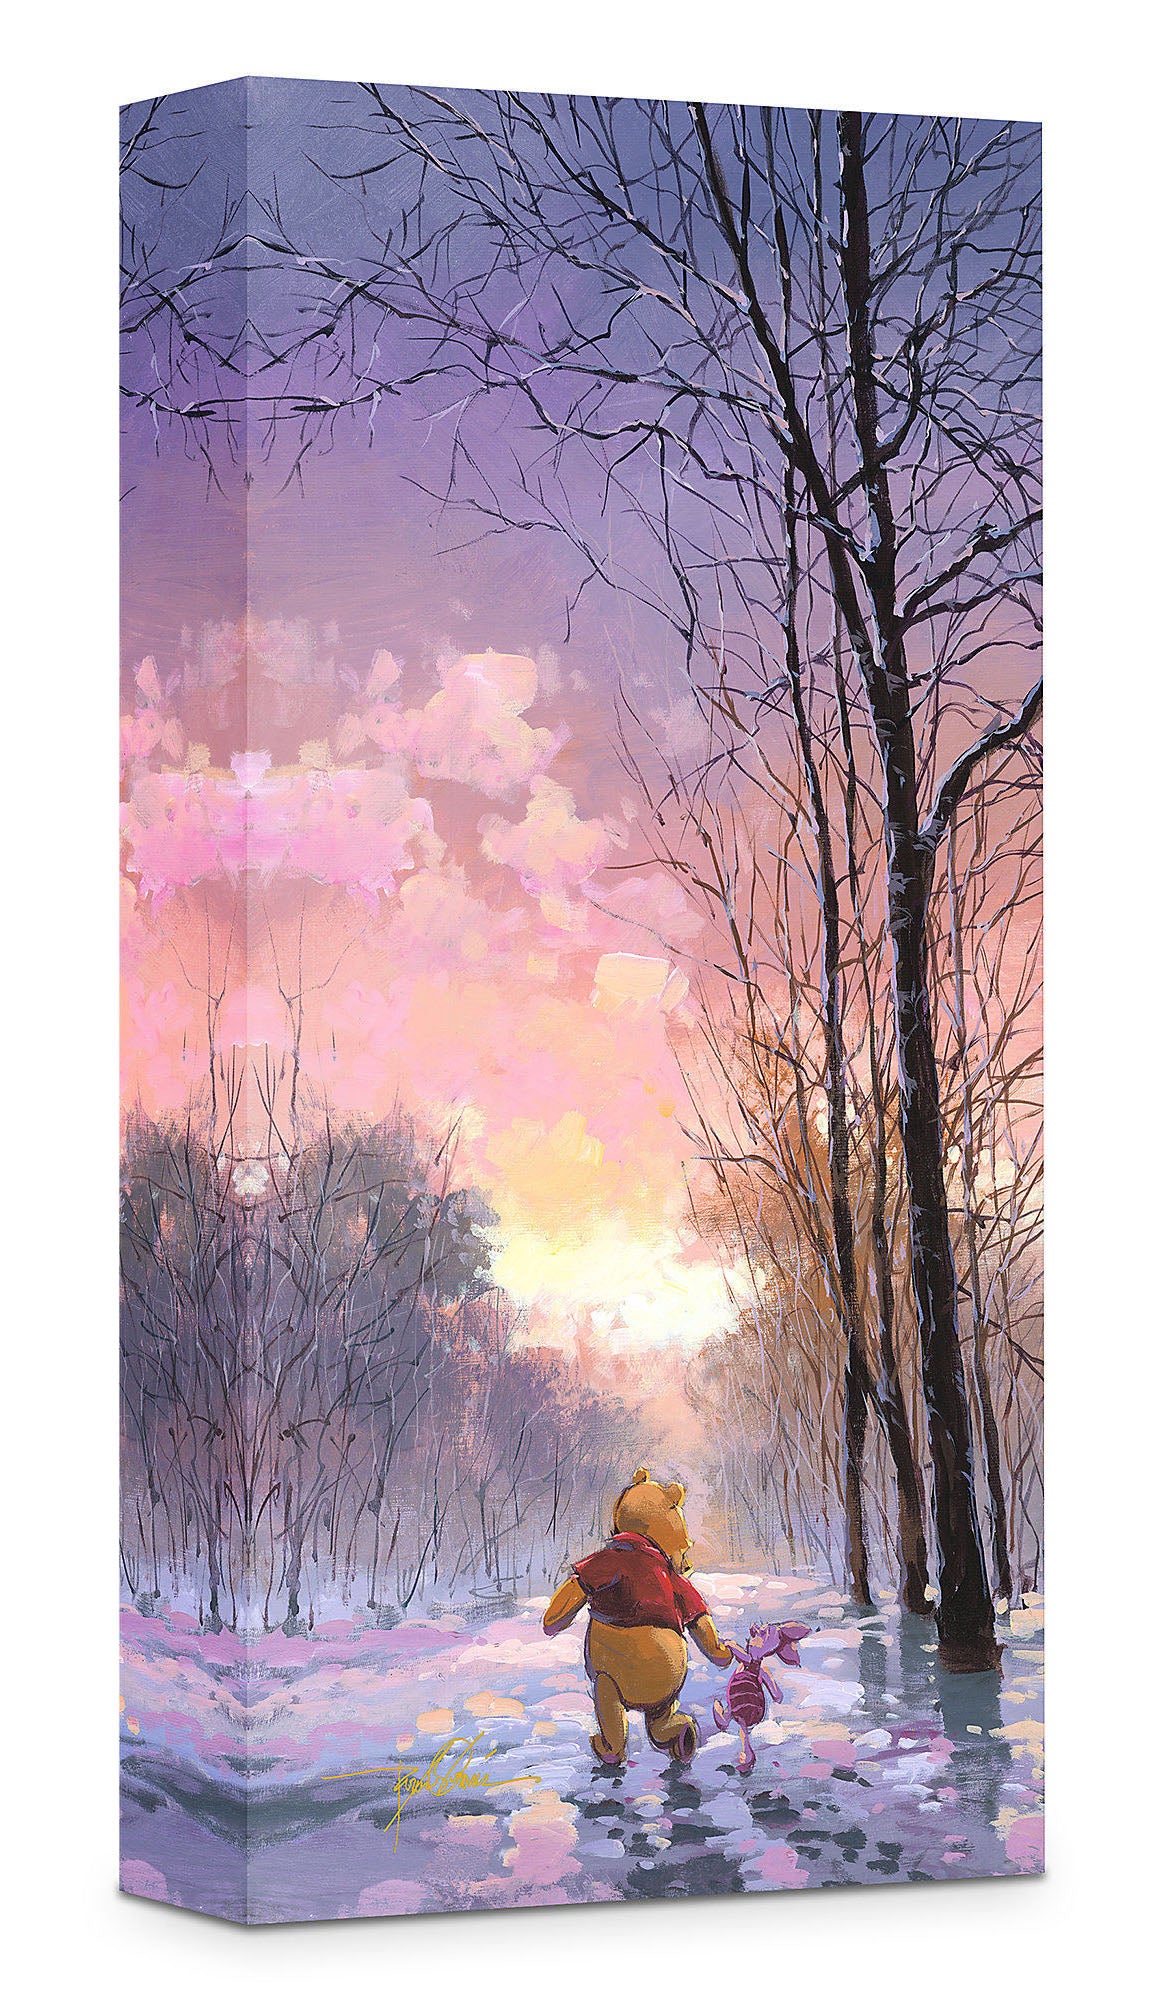 Rodel Gonzalez Disney "Snowy Path" Limited Edition Canvas Giclee